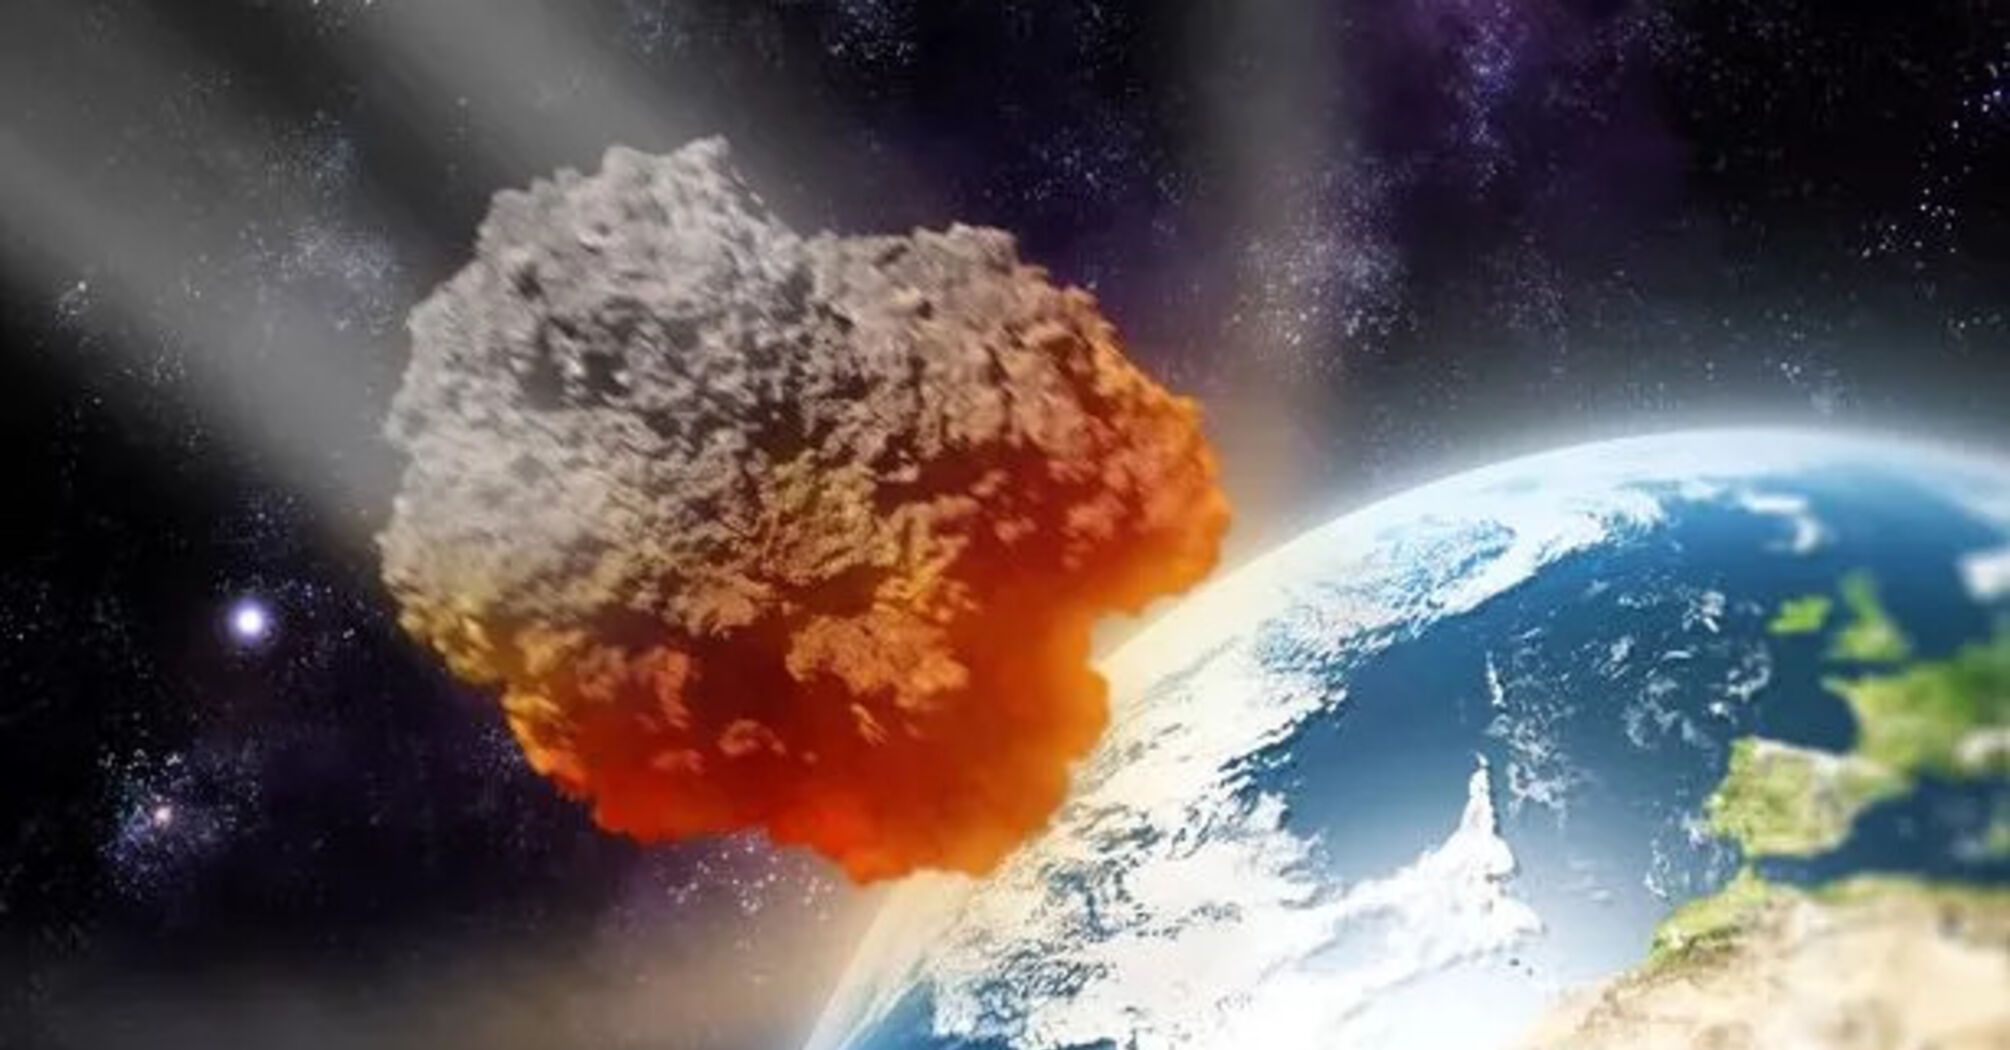 Three massive asteroids are heading towards Earth